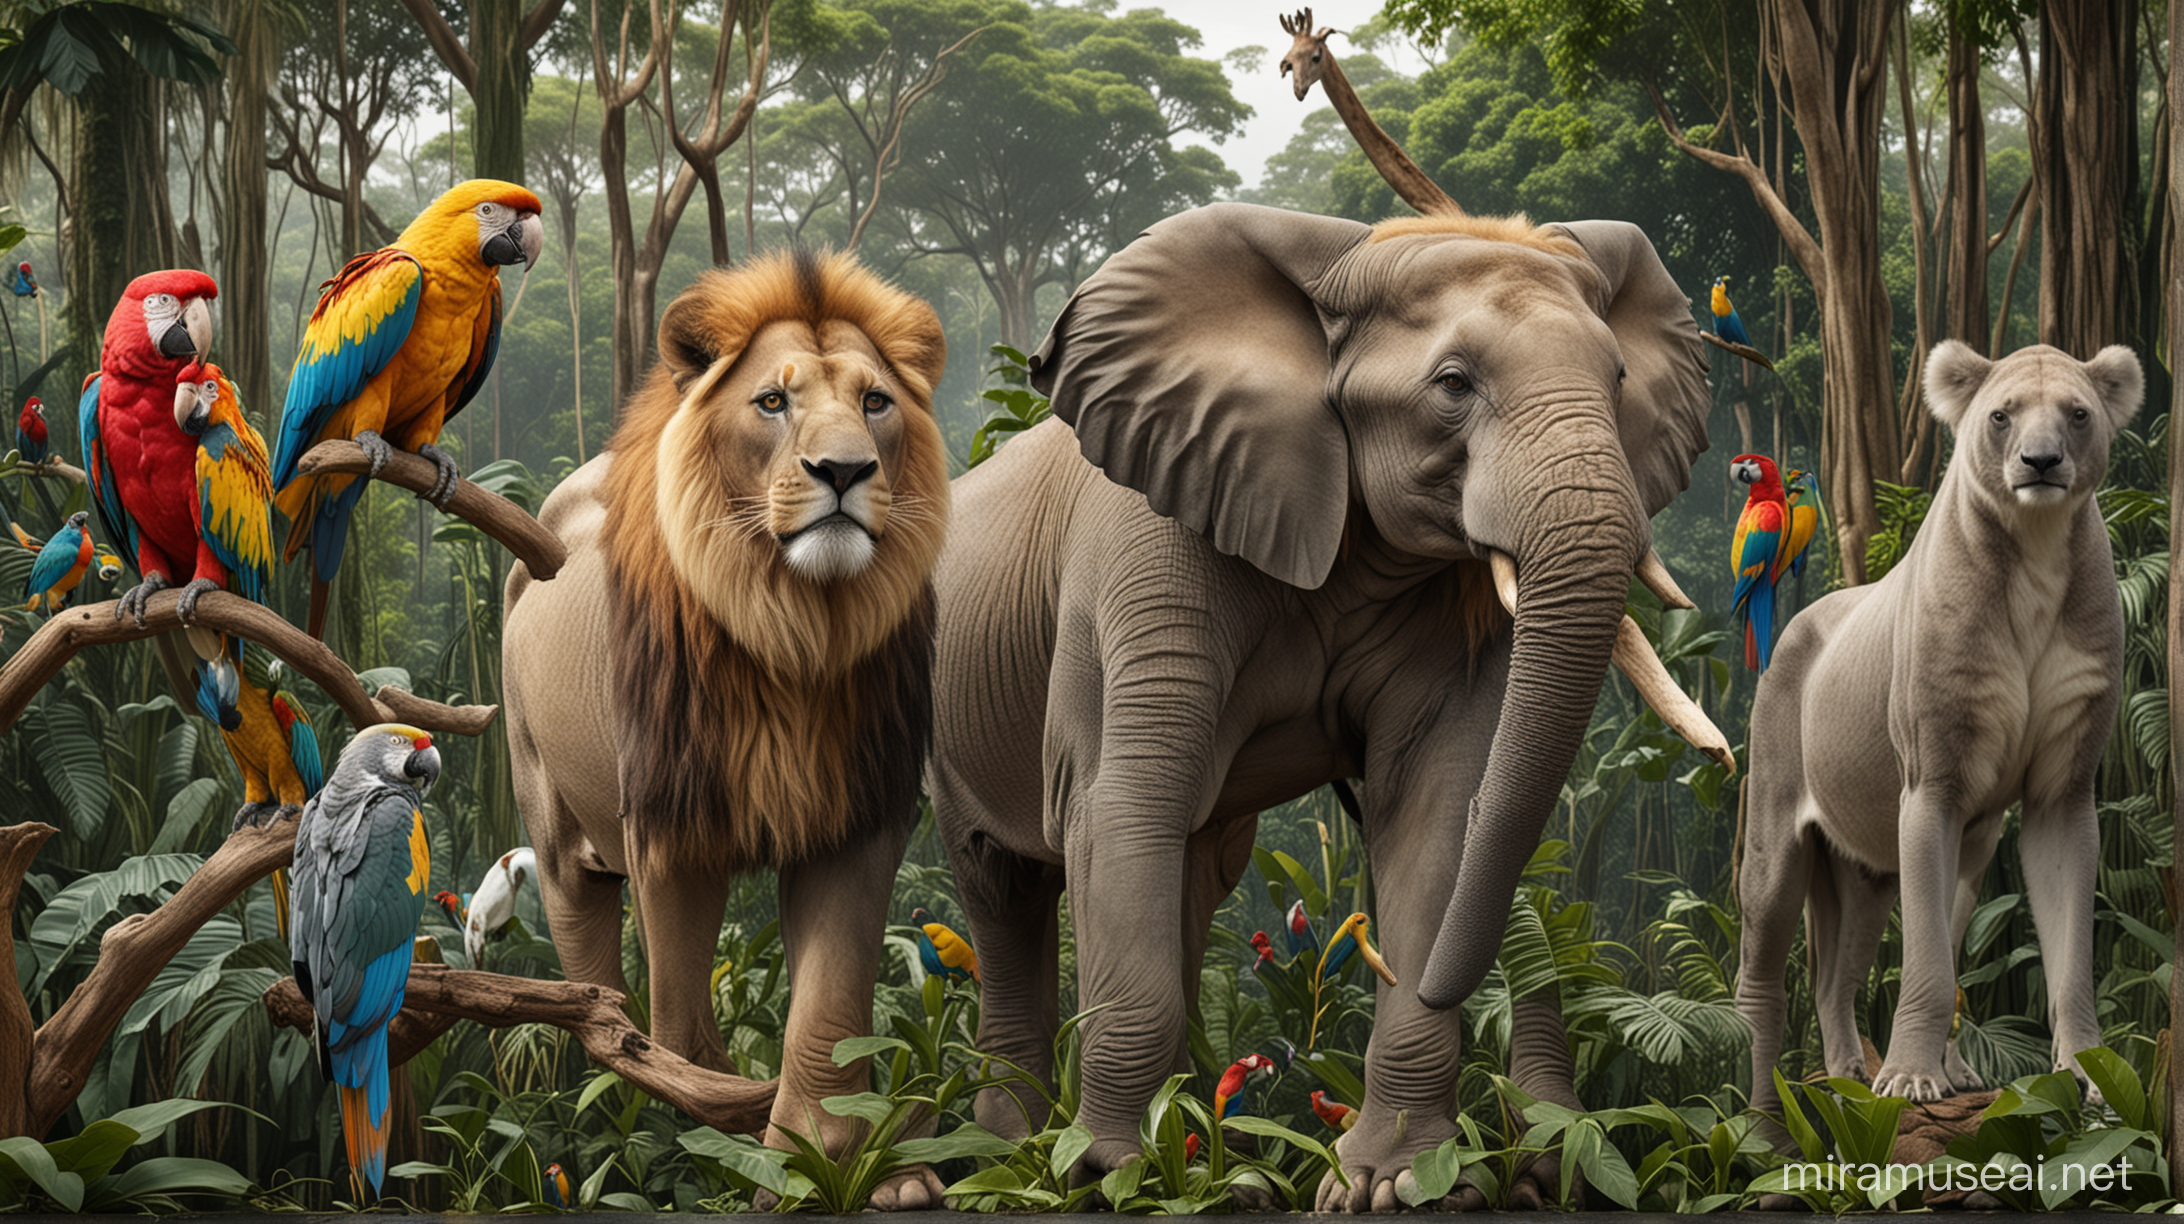 HyperRealistic Wildlife Encounter Amazon Jungle with Elephant Lion Macaws Giraffe and Koala